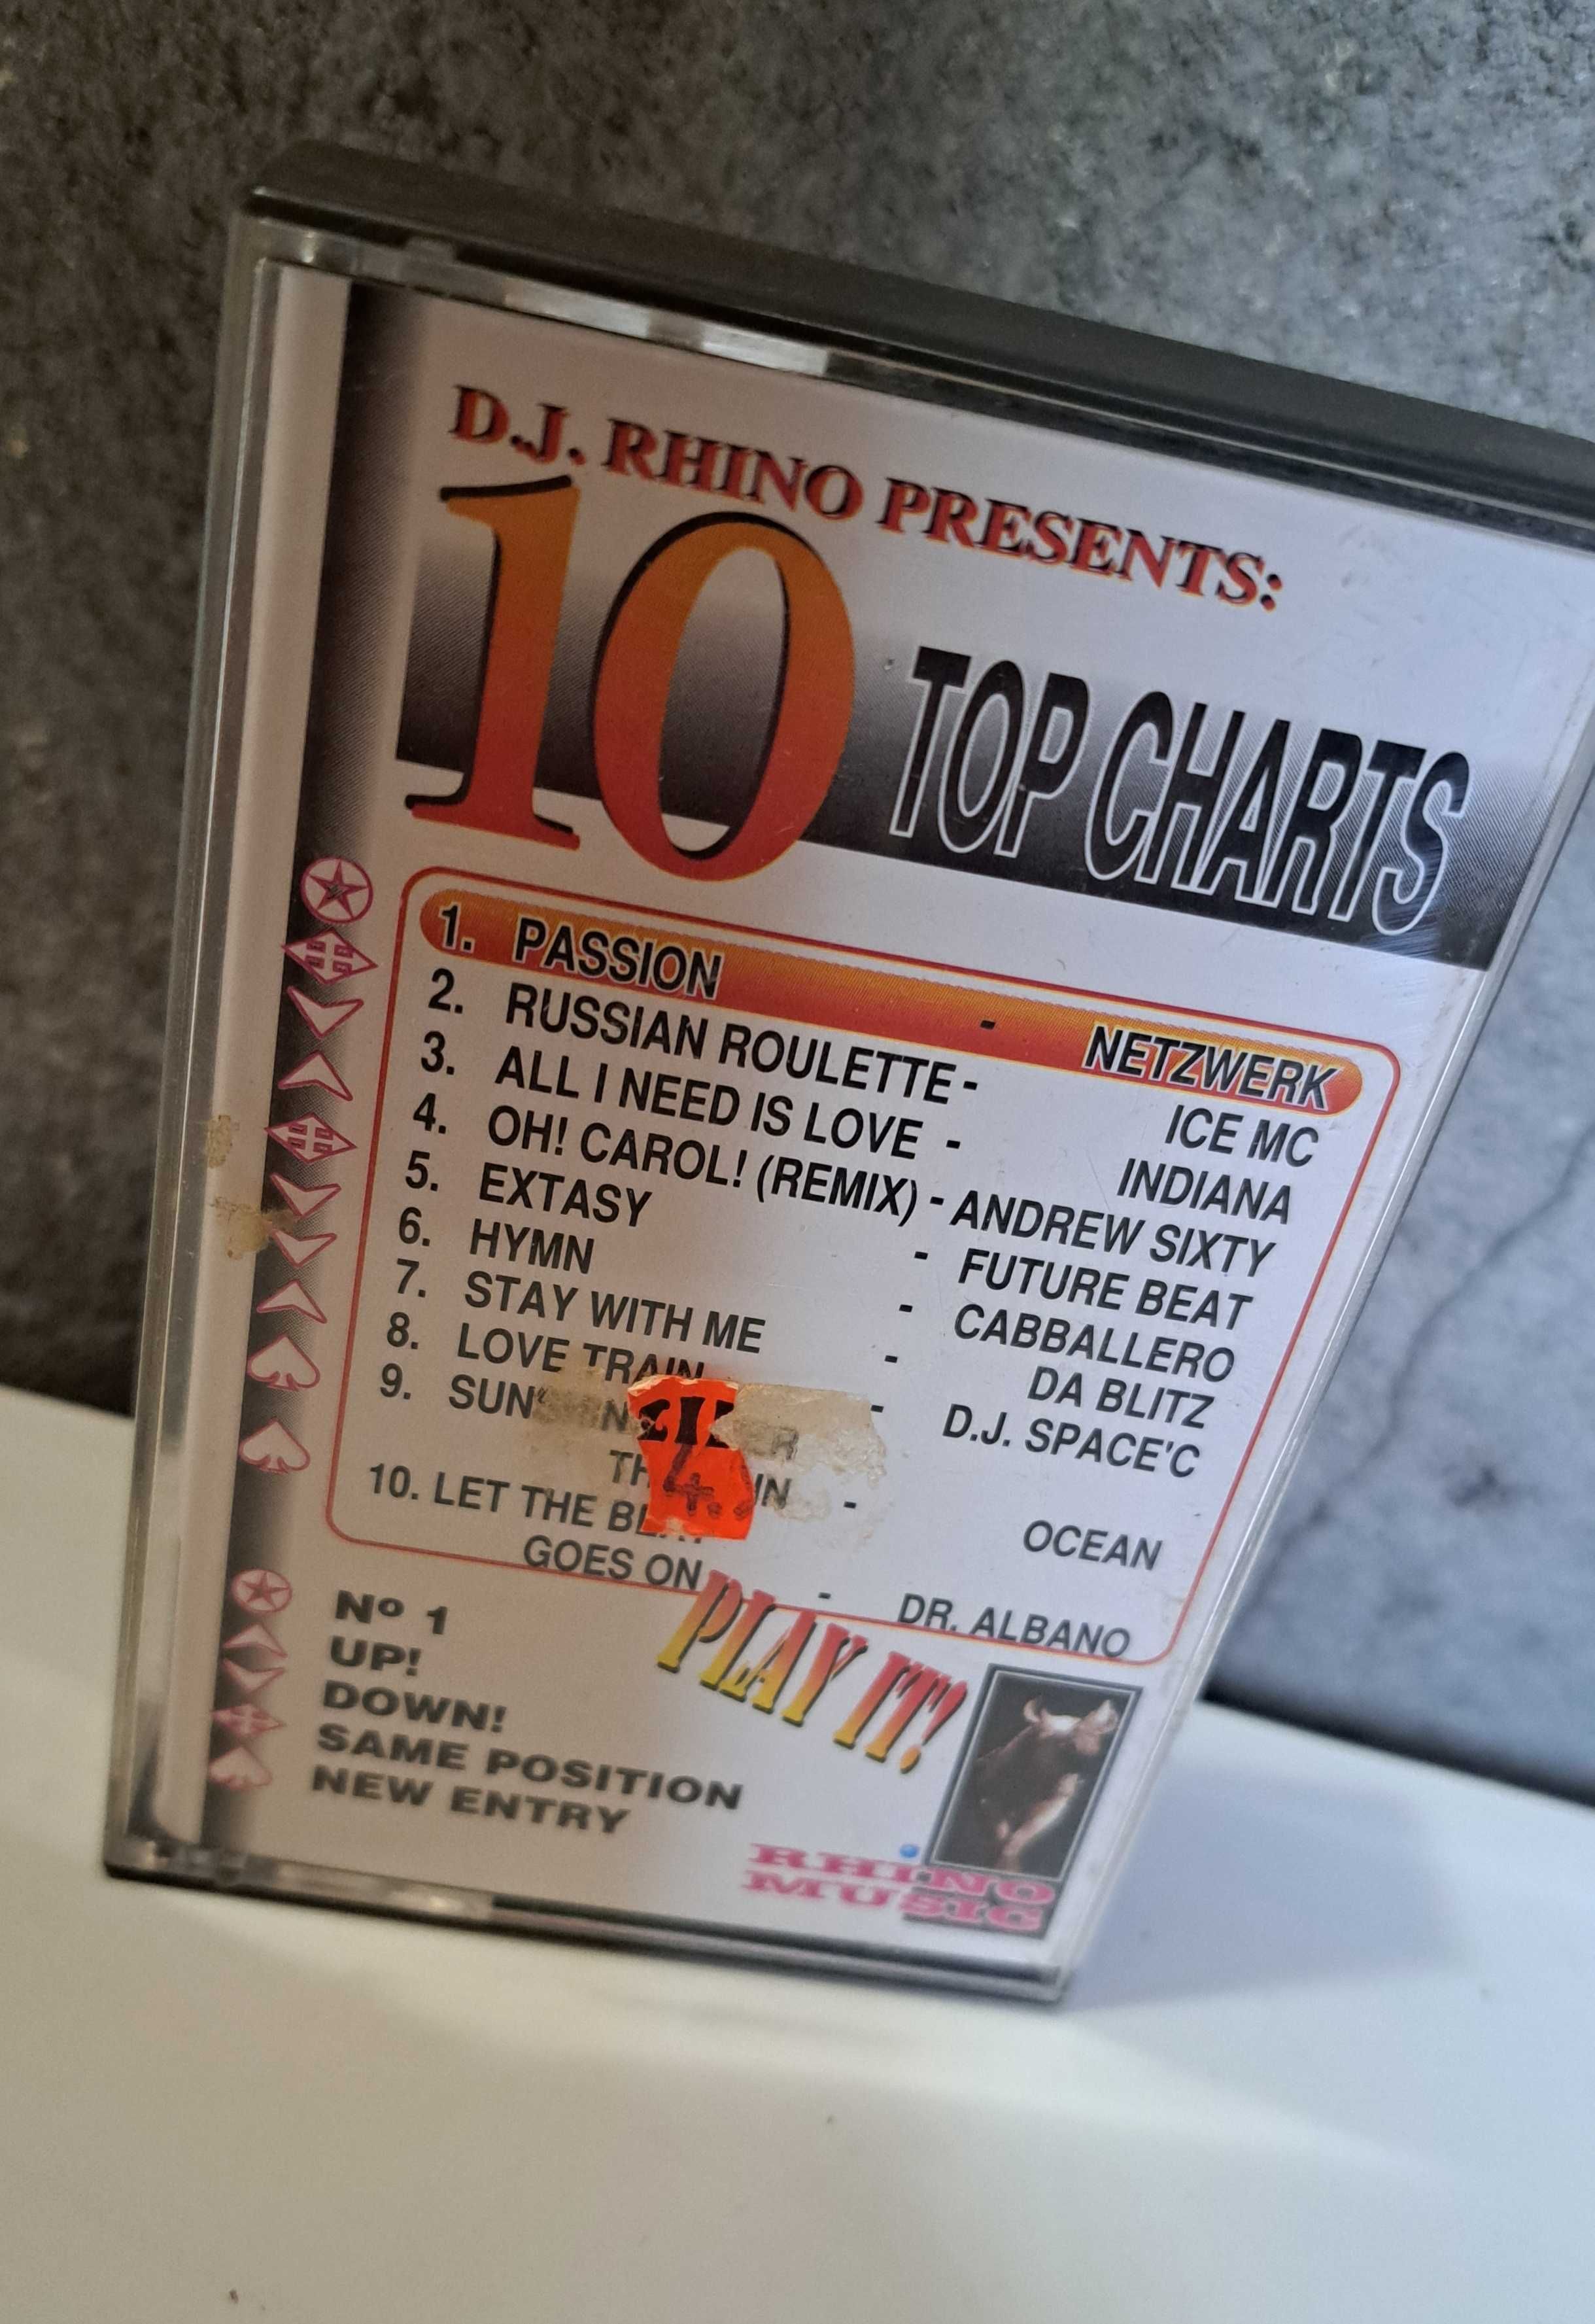 D.J. Rhino 10 top charts kaseta audio